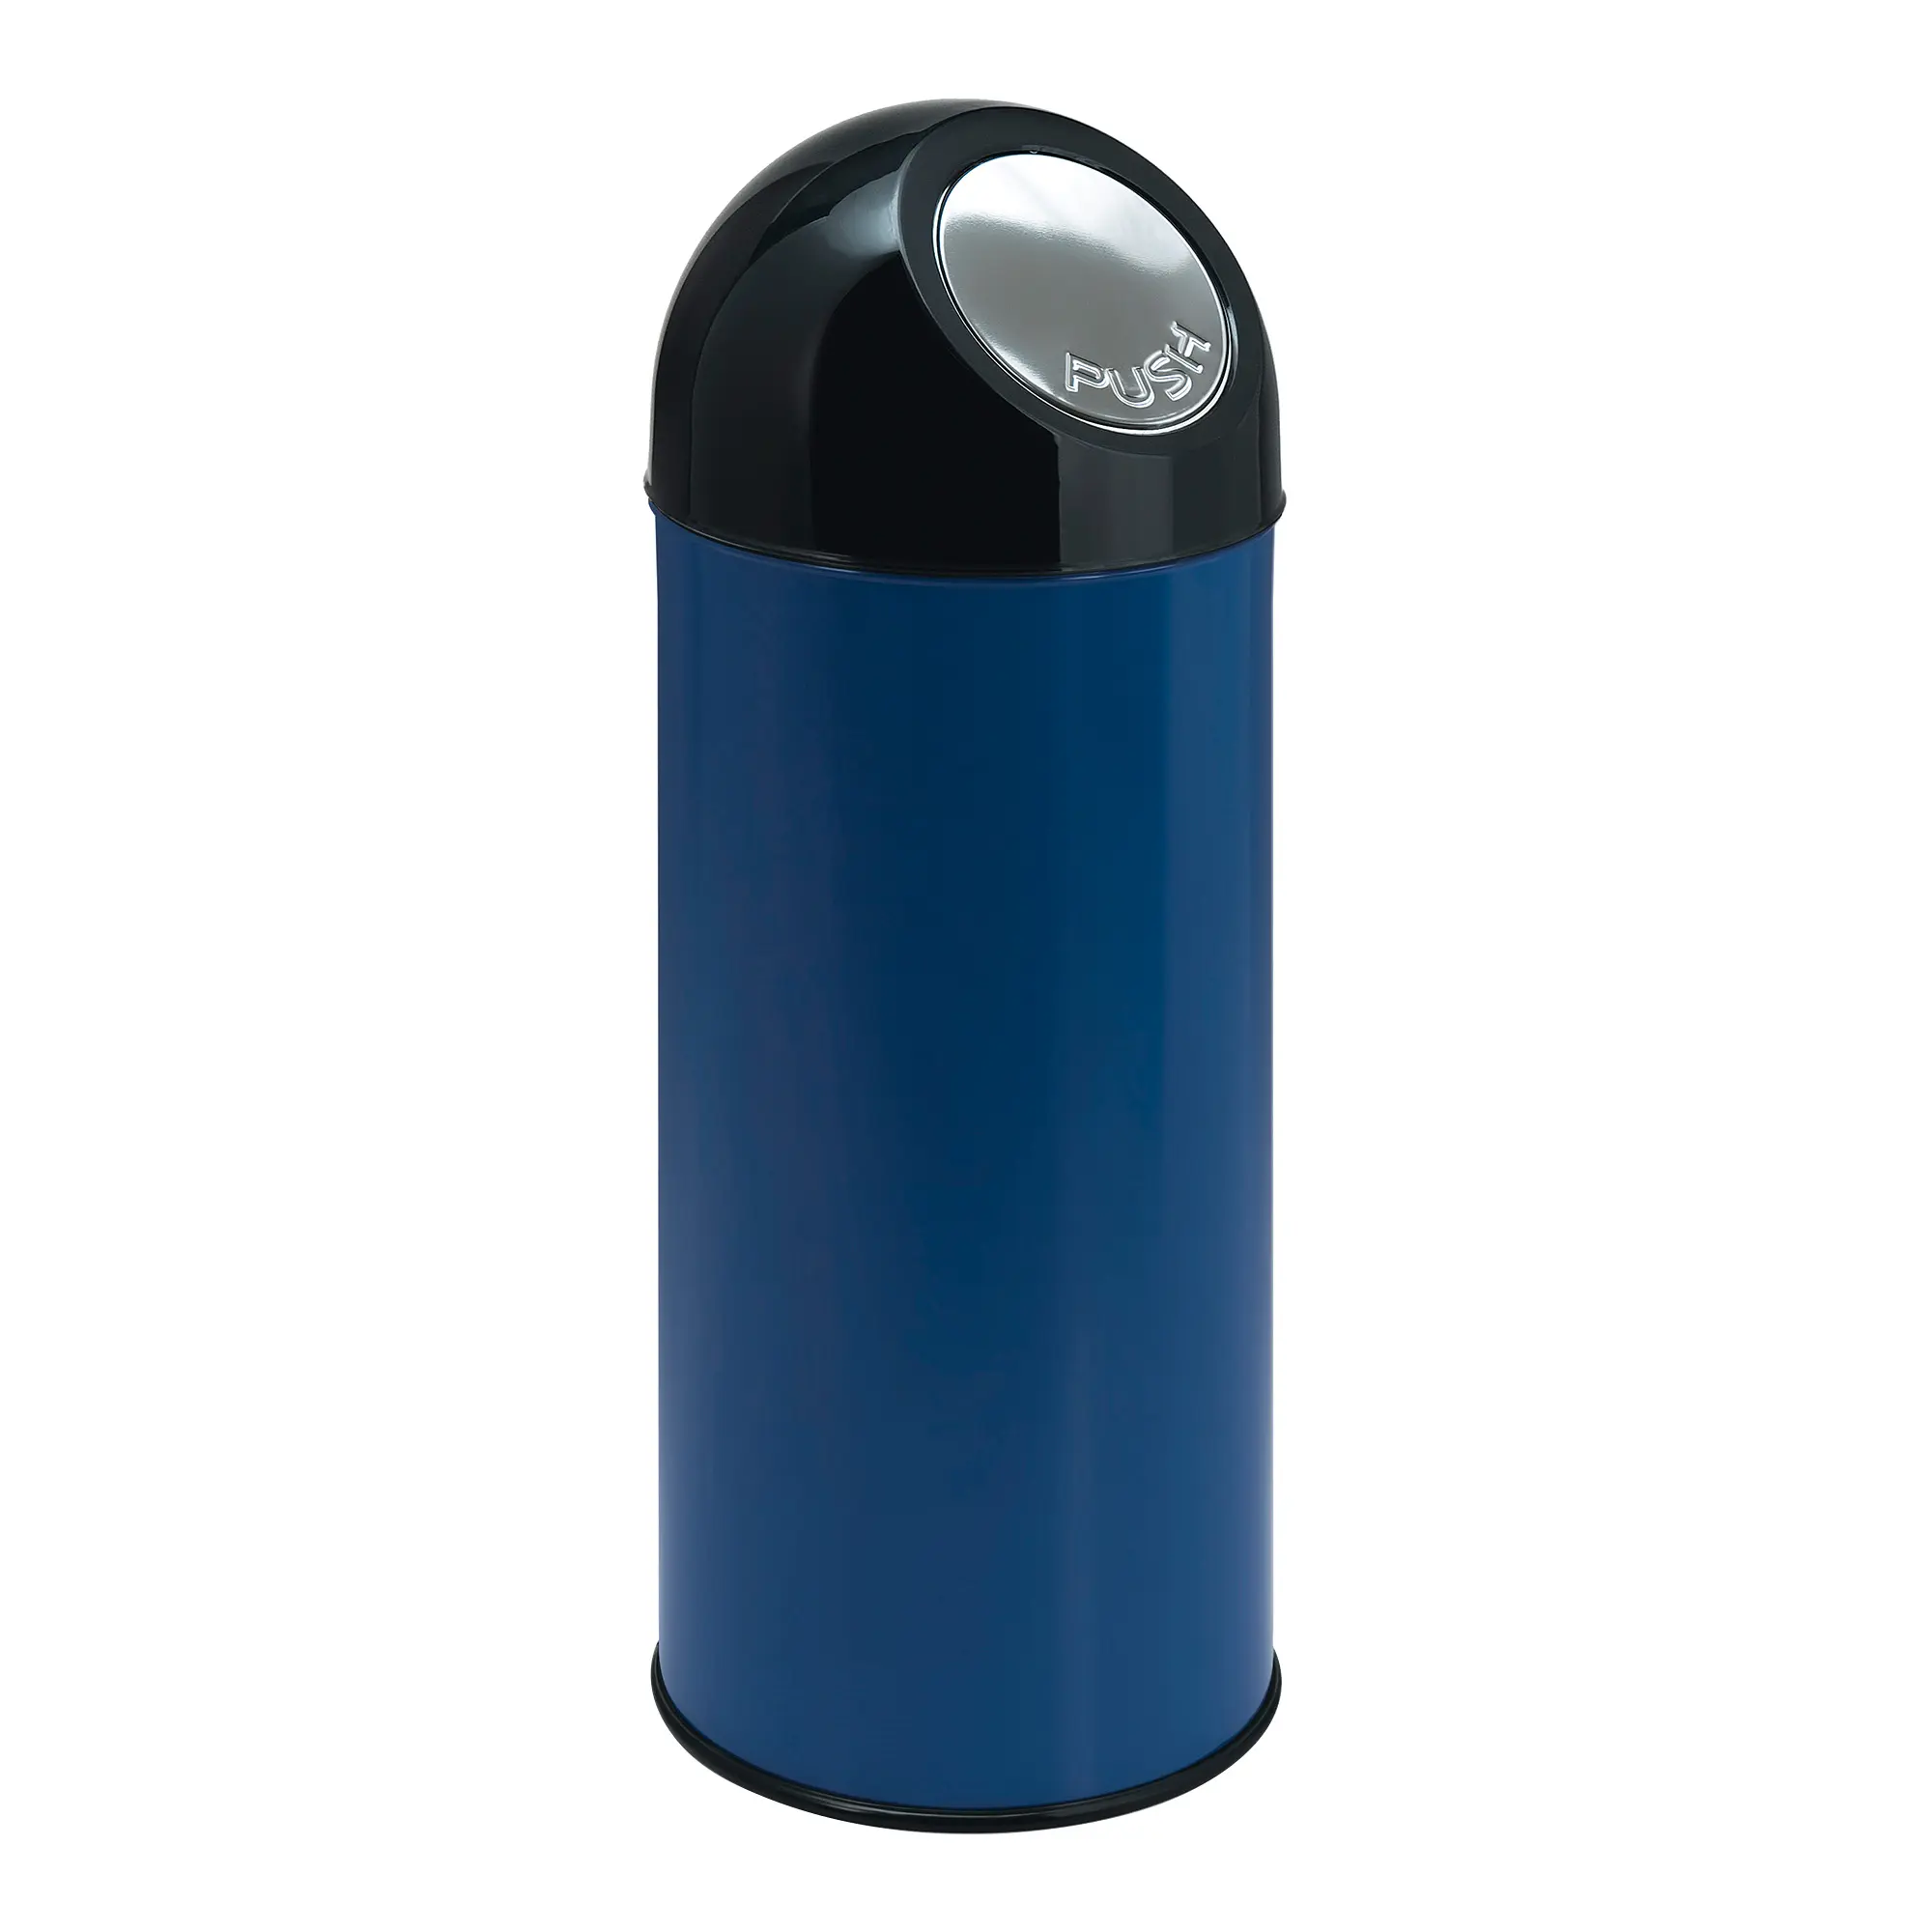 V-Part Abfallbehälter Edelstahl-Pushklappe Inneneimer 55 Liter blau/schwarz 31023356_1